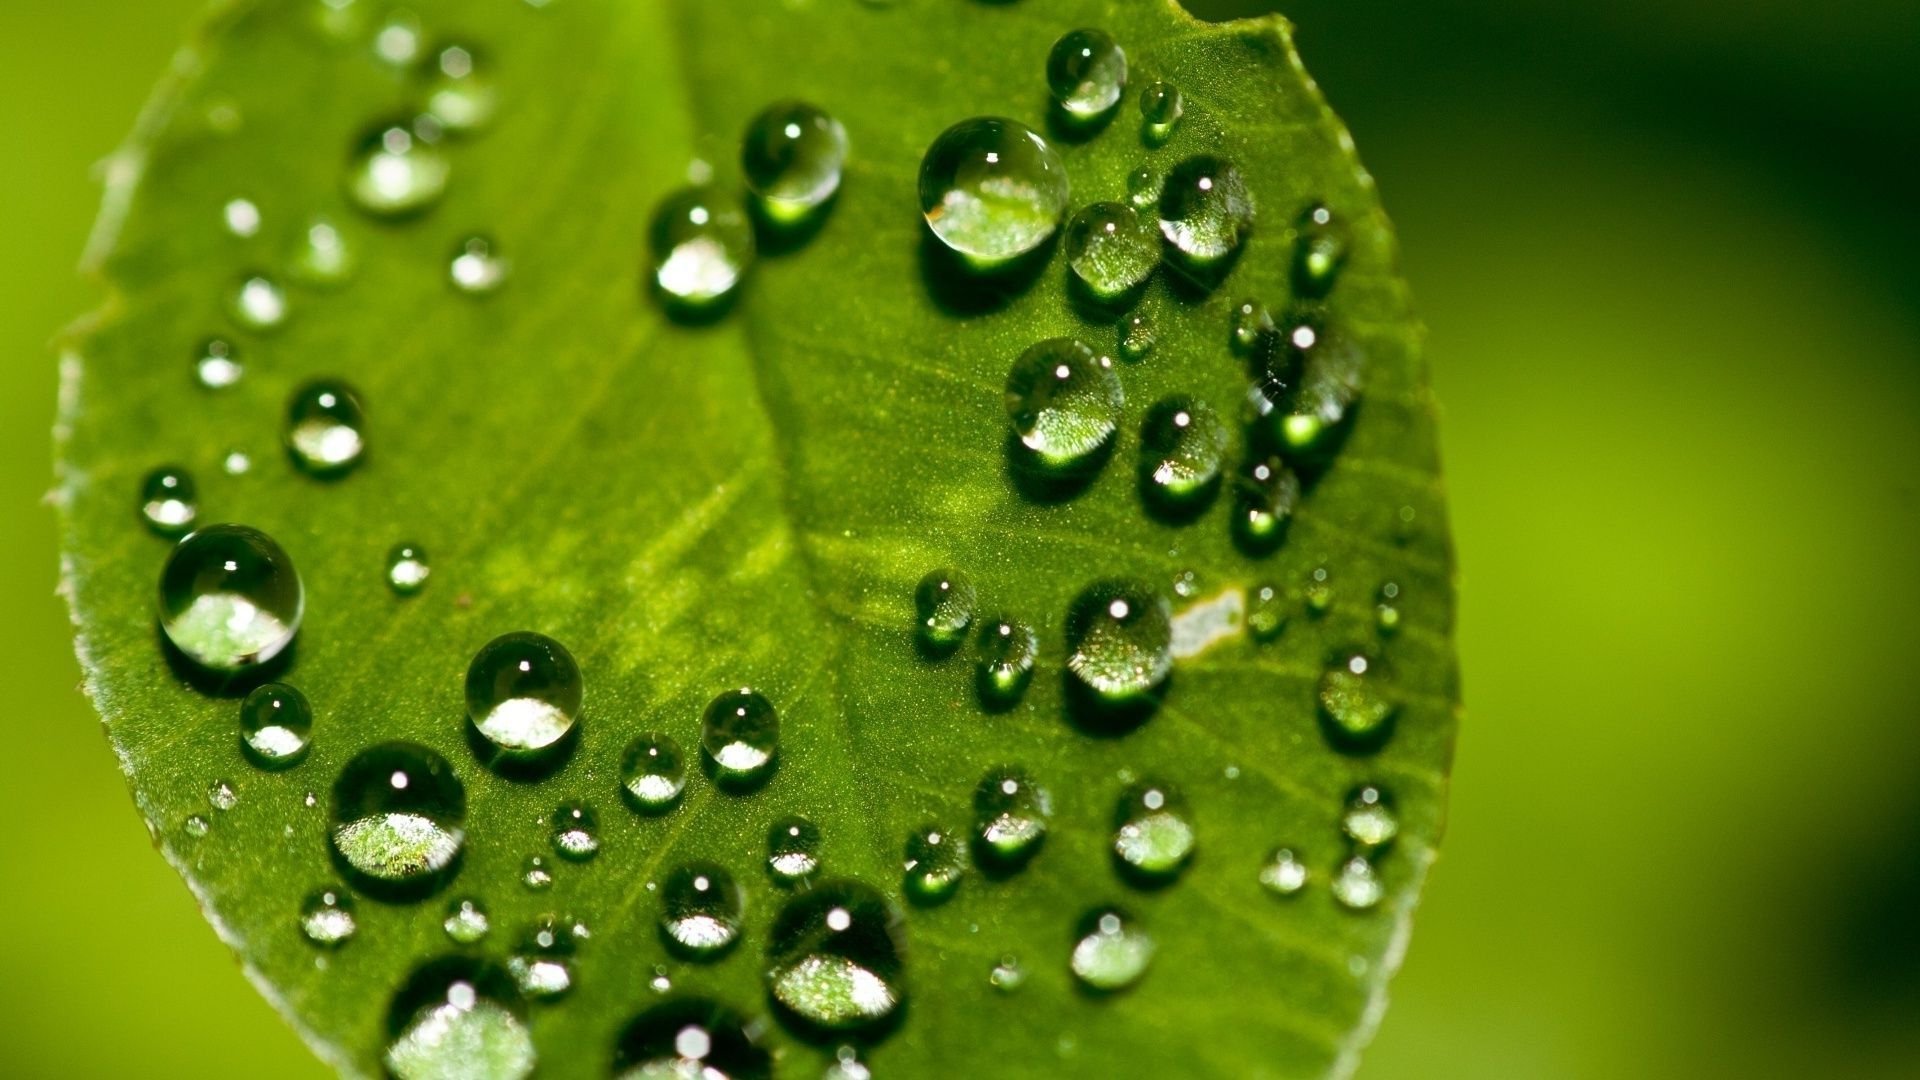 Raindrops on leafs photo